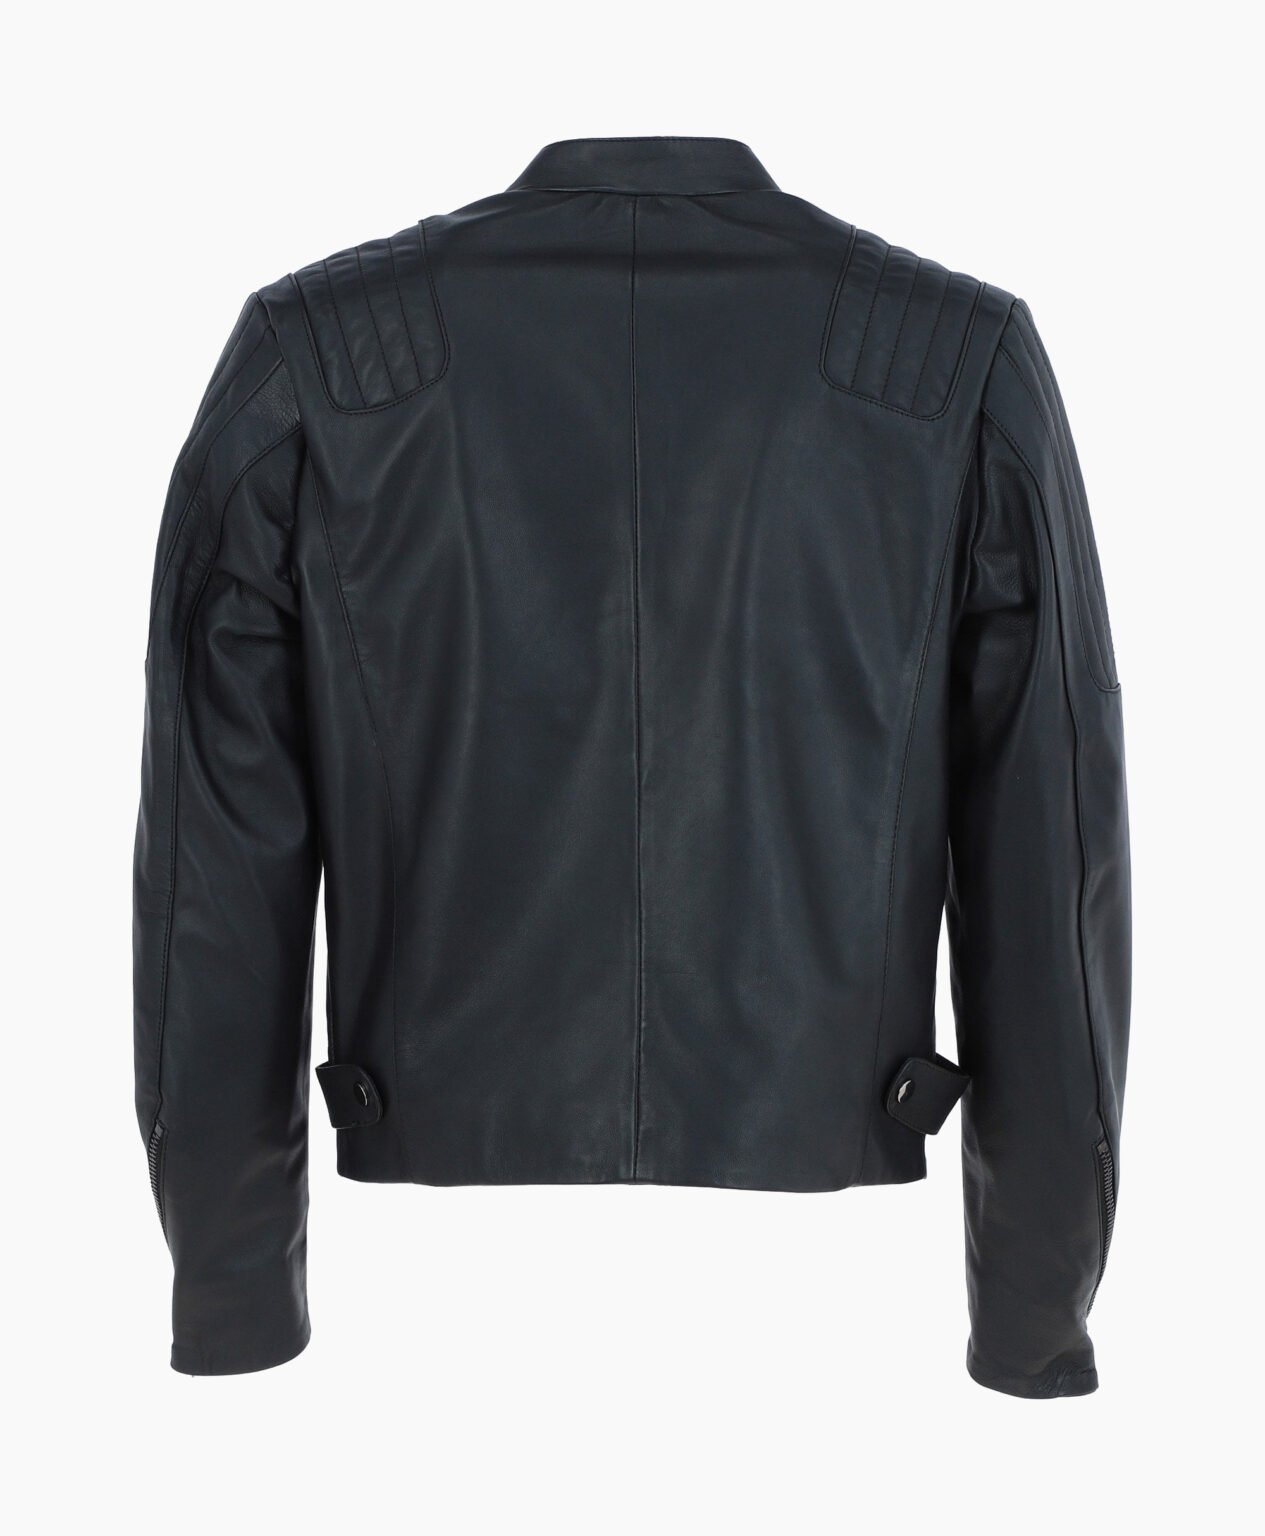 vogue-jacket-leather-biker-jacket-black-charleston-image201